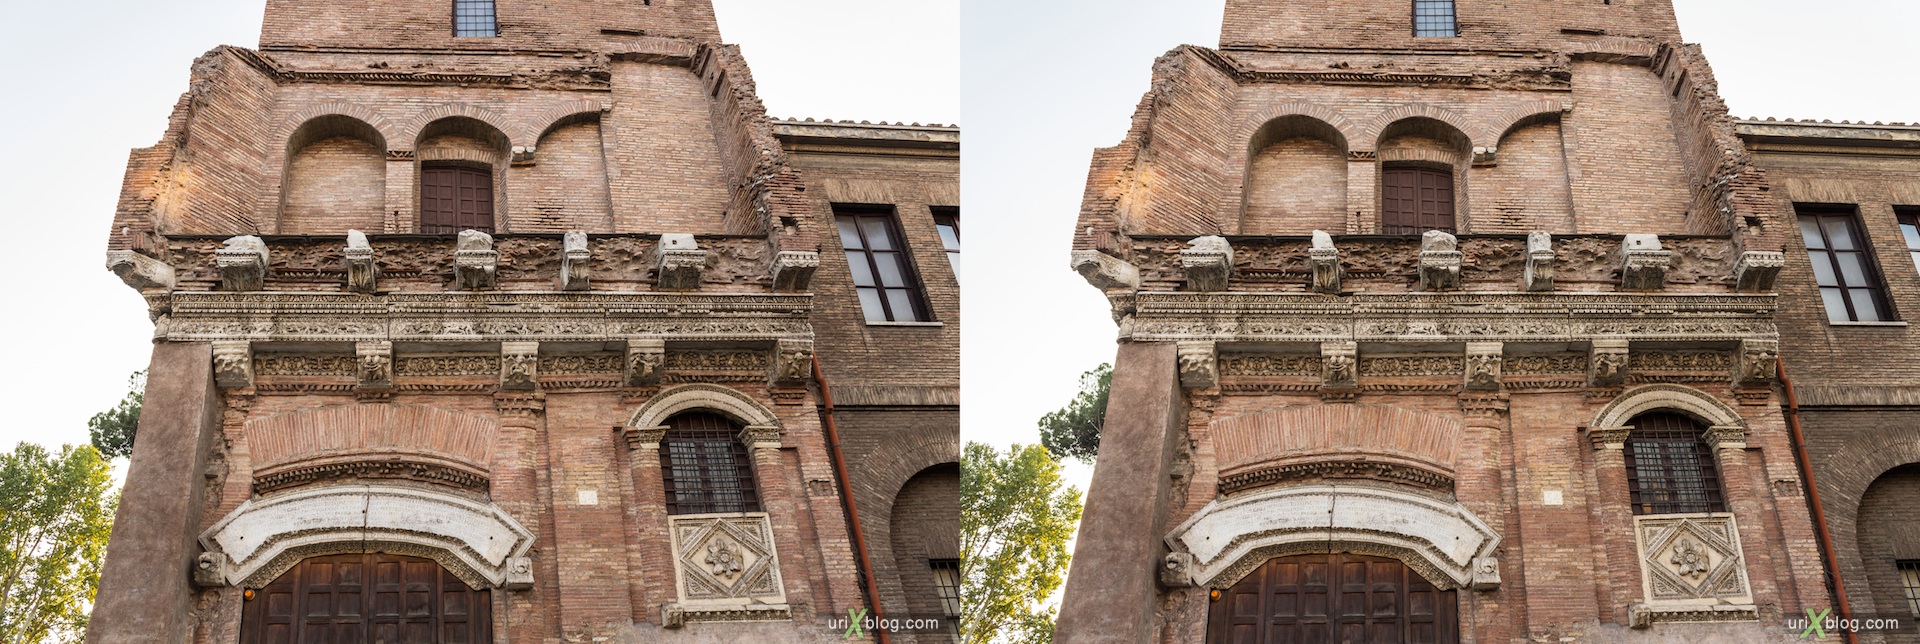 2012, Casa Dei Crescenzi, via Luigi Petroselli street, 3D, stereo pair, cross-eyed, crossview, cross view stereo pair